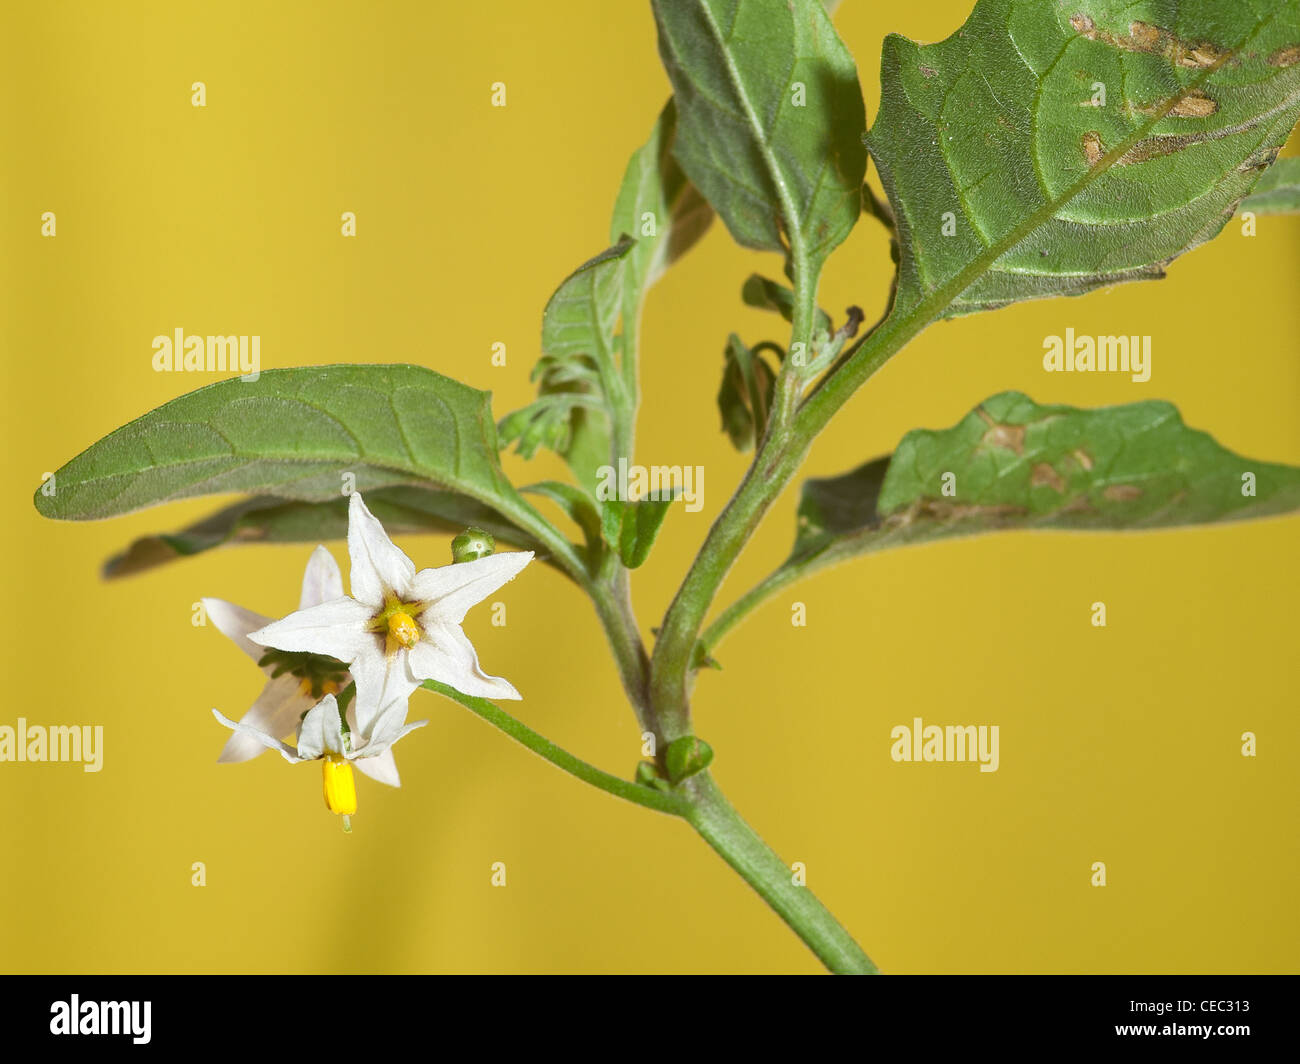 European black nightshade, Solanum nigrum, portrait of white flower with nice out focus background. Stock Photo